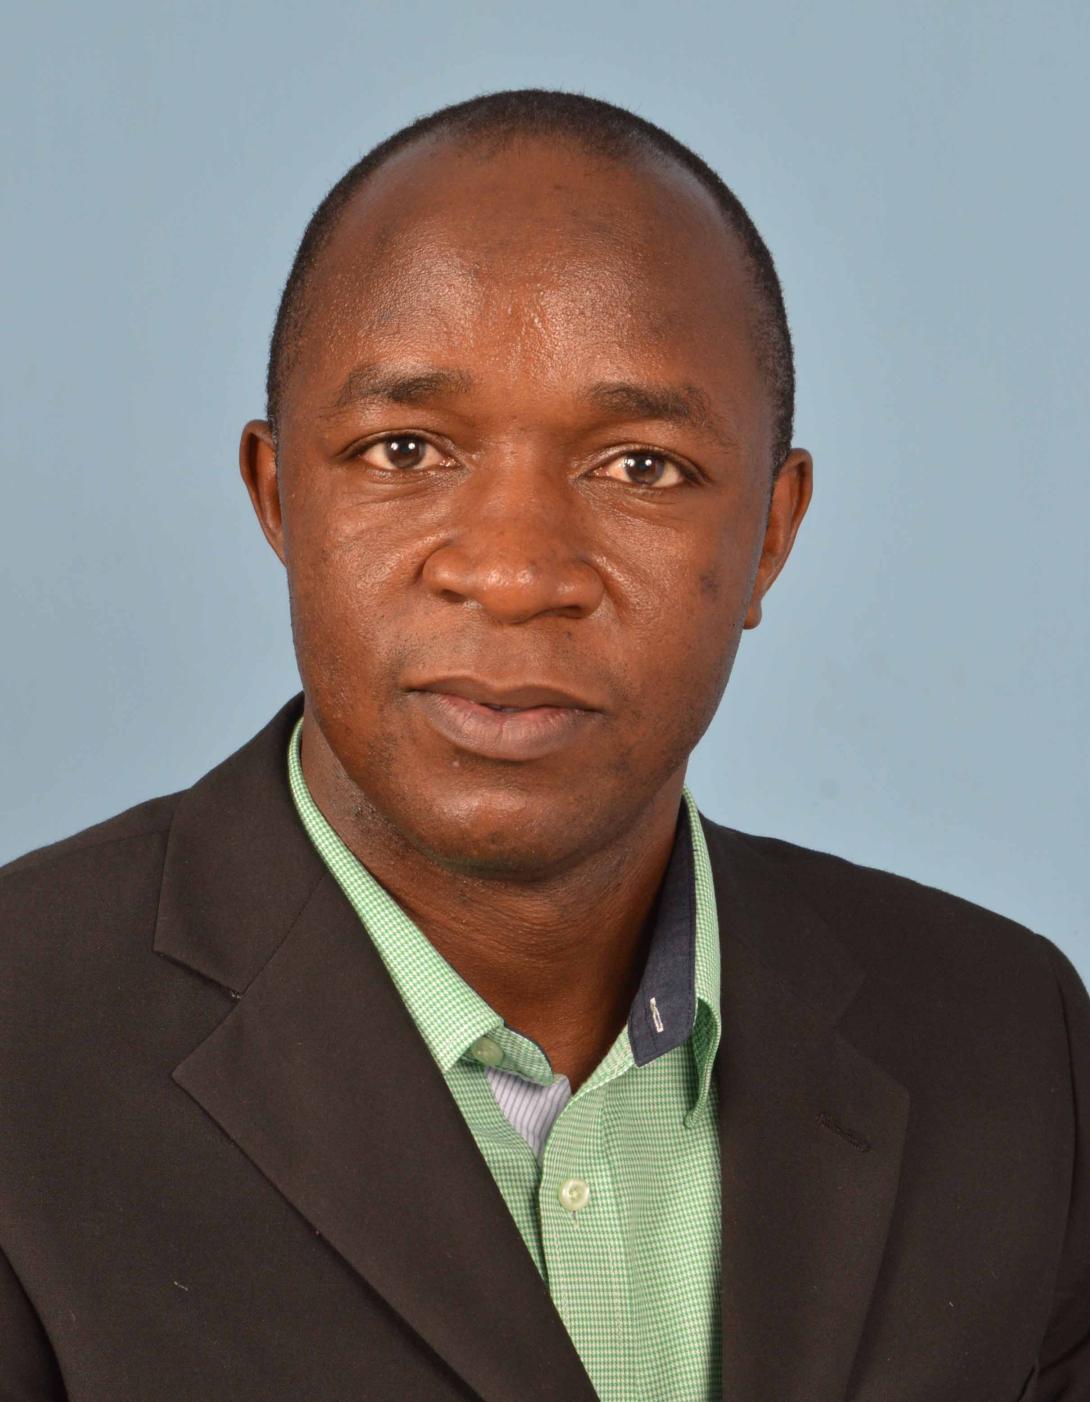 David Katiambo from the Technical University of Kenya